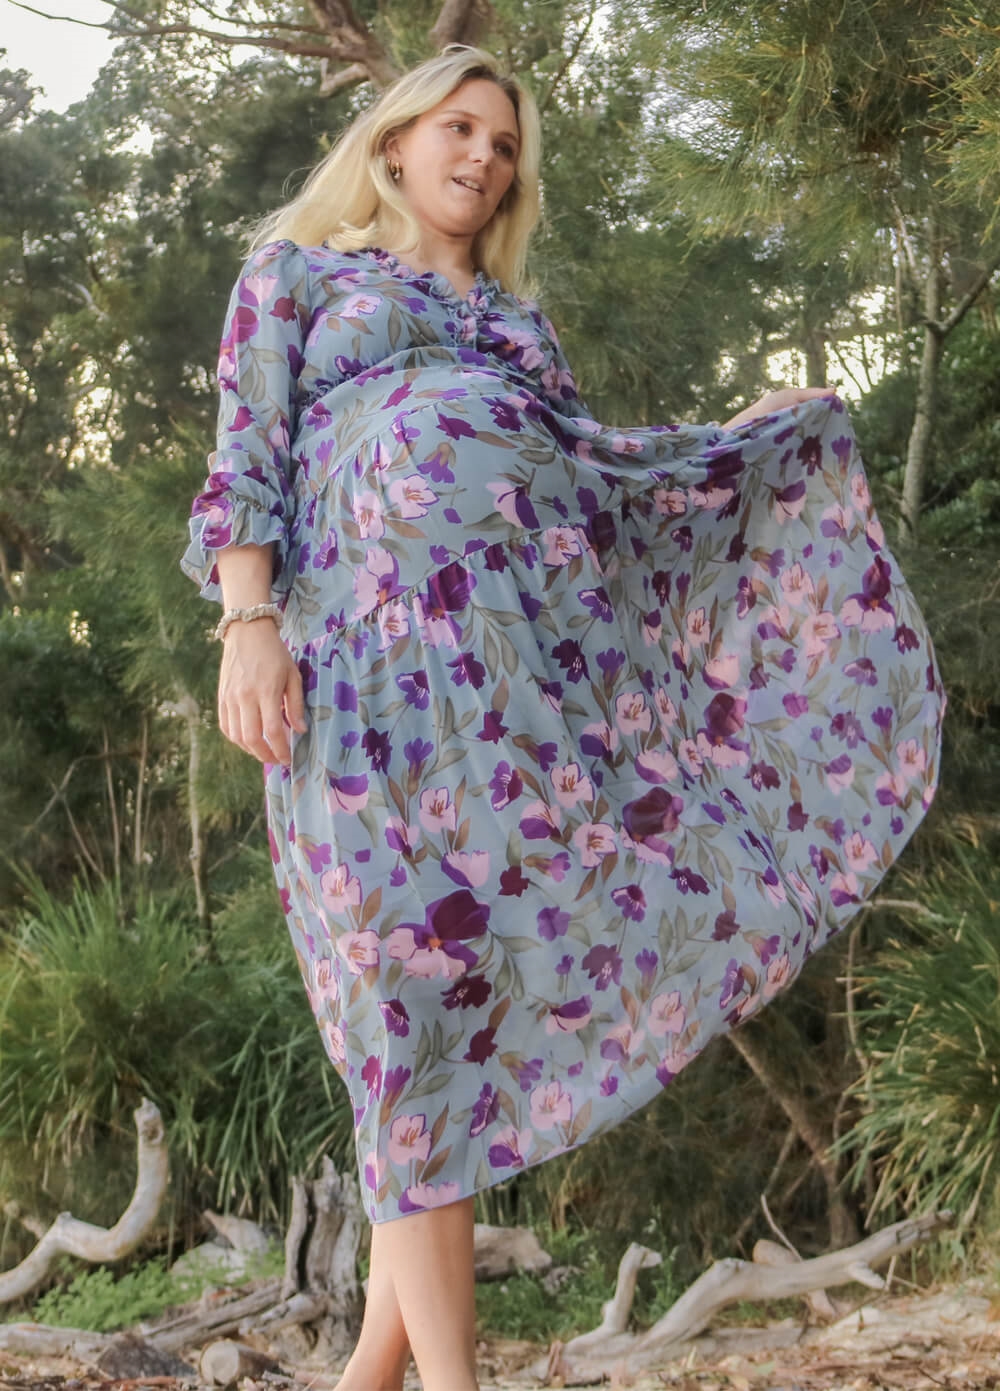 Lait & Co - Wanderlust Maternity Maxi Gown in Blue/Purple Floral